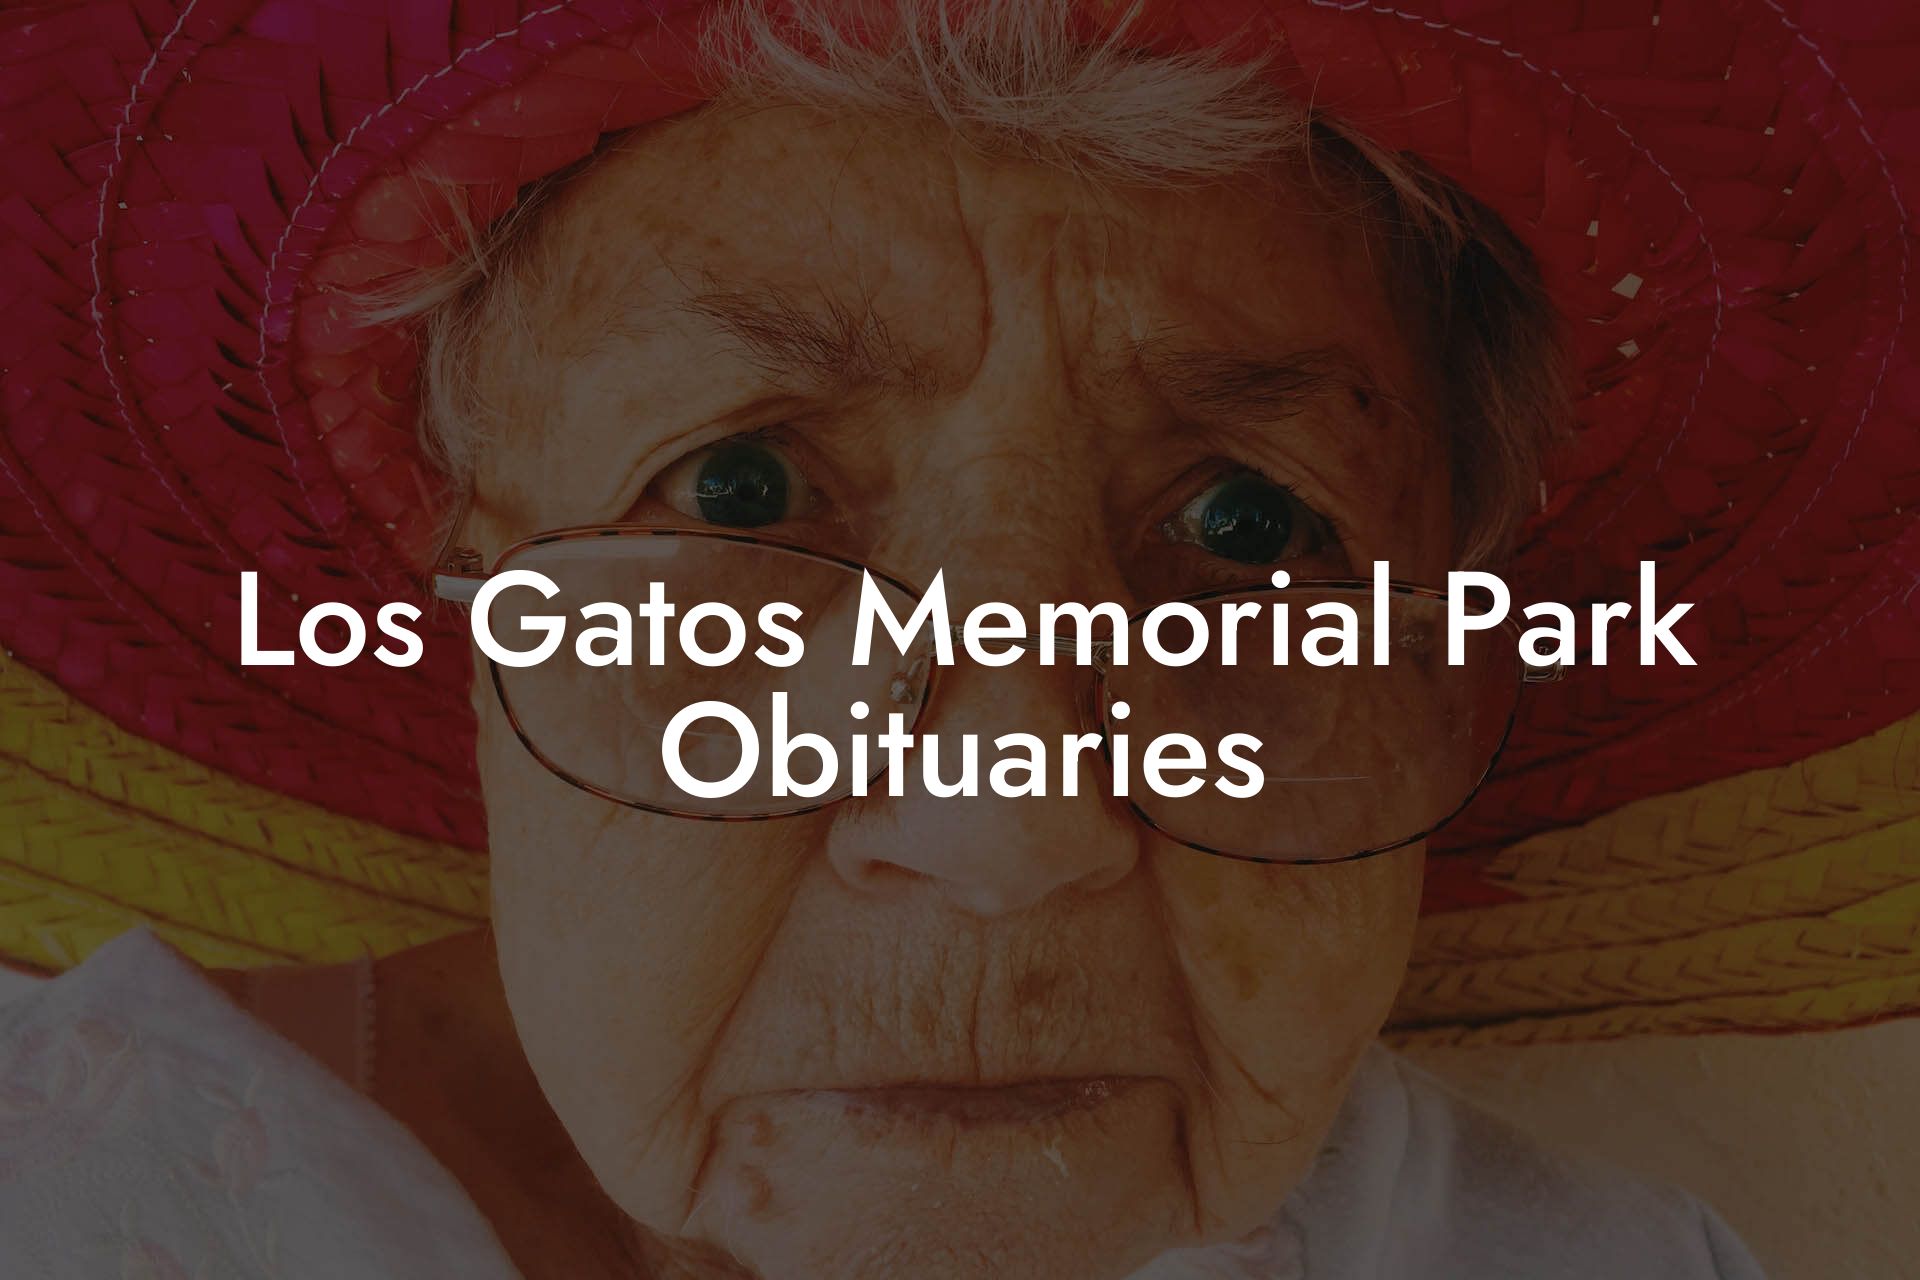 Los Gatos Memorial Park Obituaries